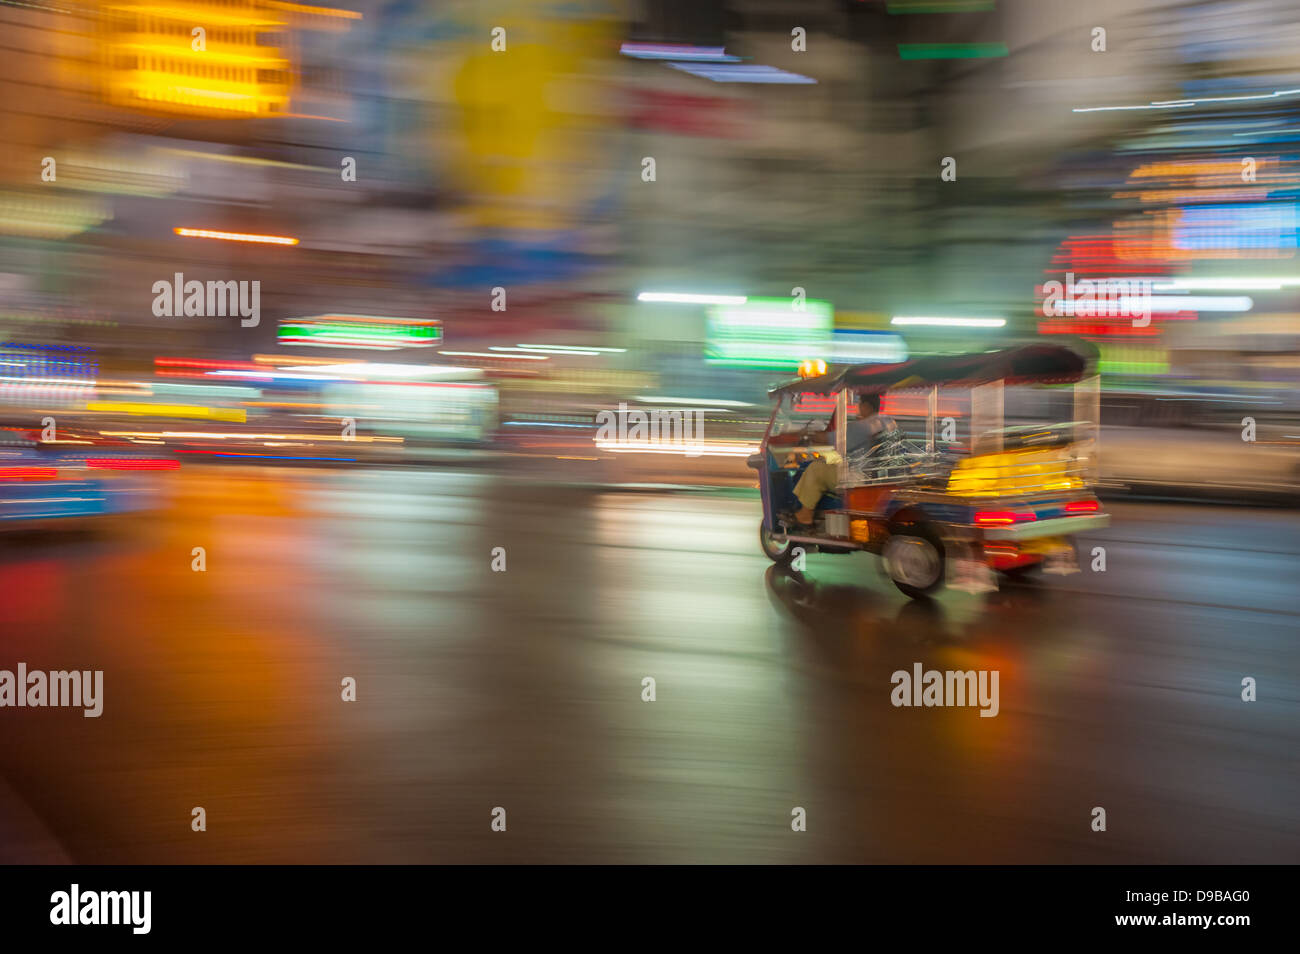 Tuk-tuk in motion blur, Bangkok, Thailand Stock Photo